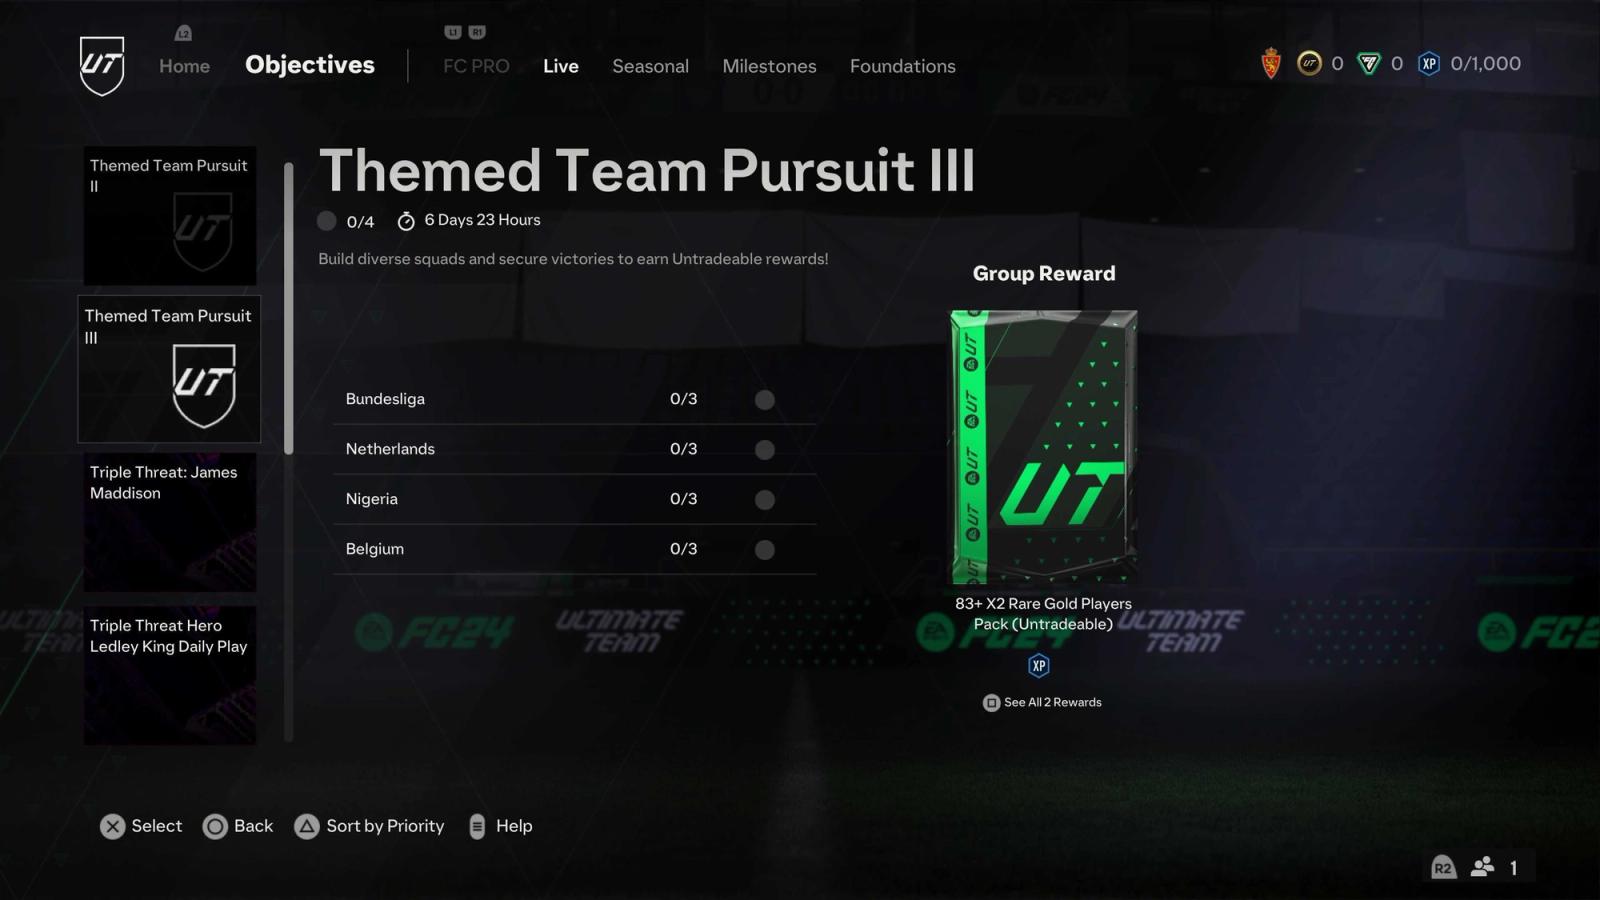 Themed Team Pursuit III Objective